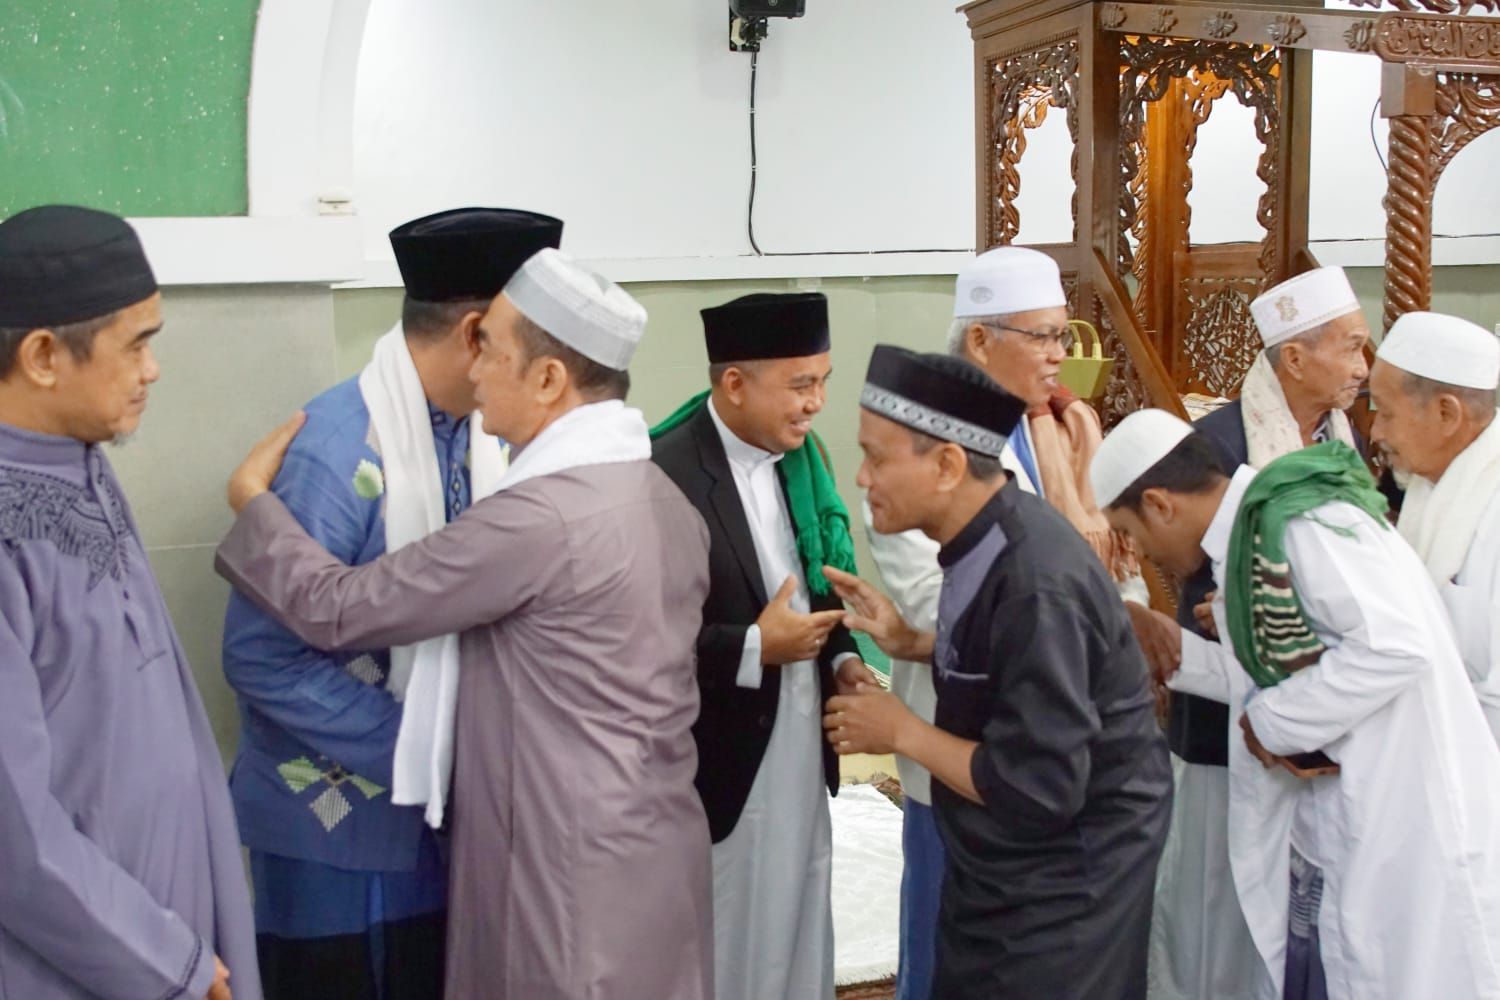 Walikota Pangkalpinang, Maulan Aklil Bersalaman dengan Masyarakat Setelah Sholat Idul Adha di Masjid Jamik Kota Pangkalpinang.